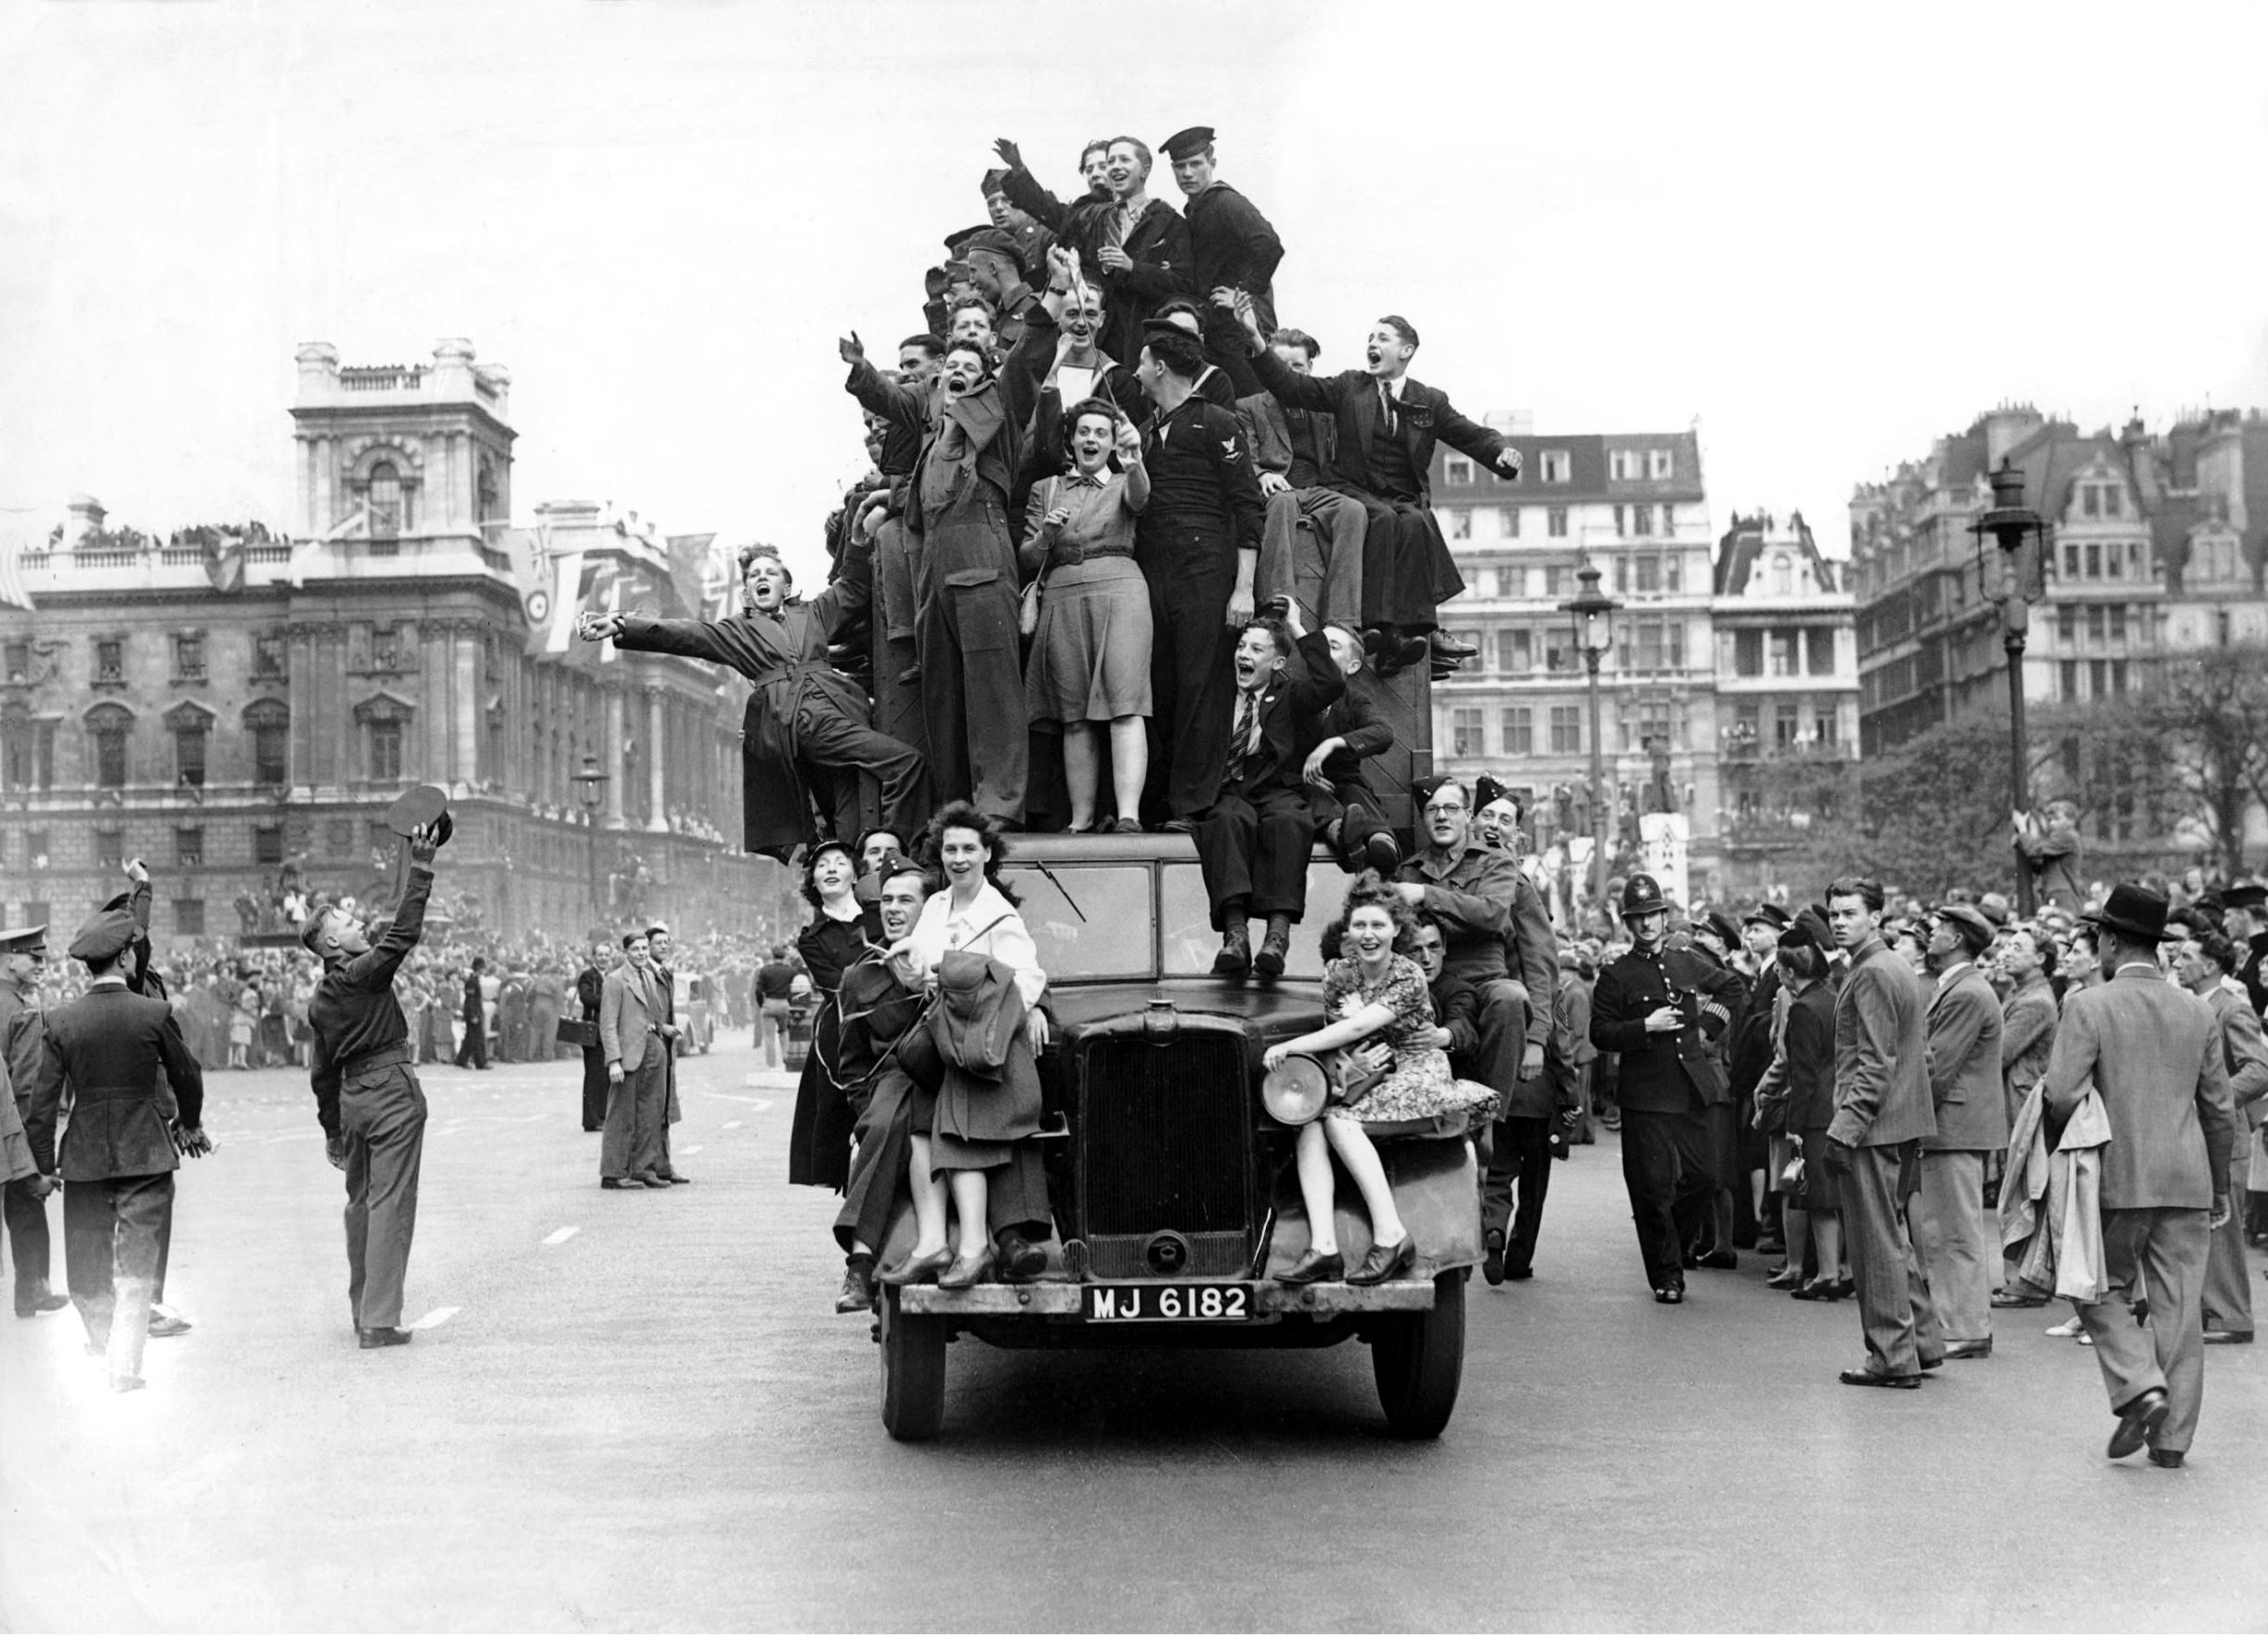 70 years ago: Historic VE Day celebration photos